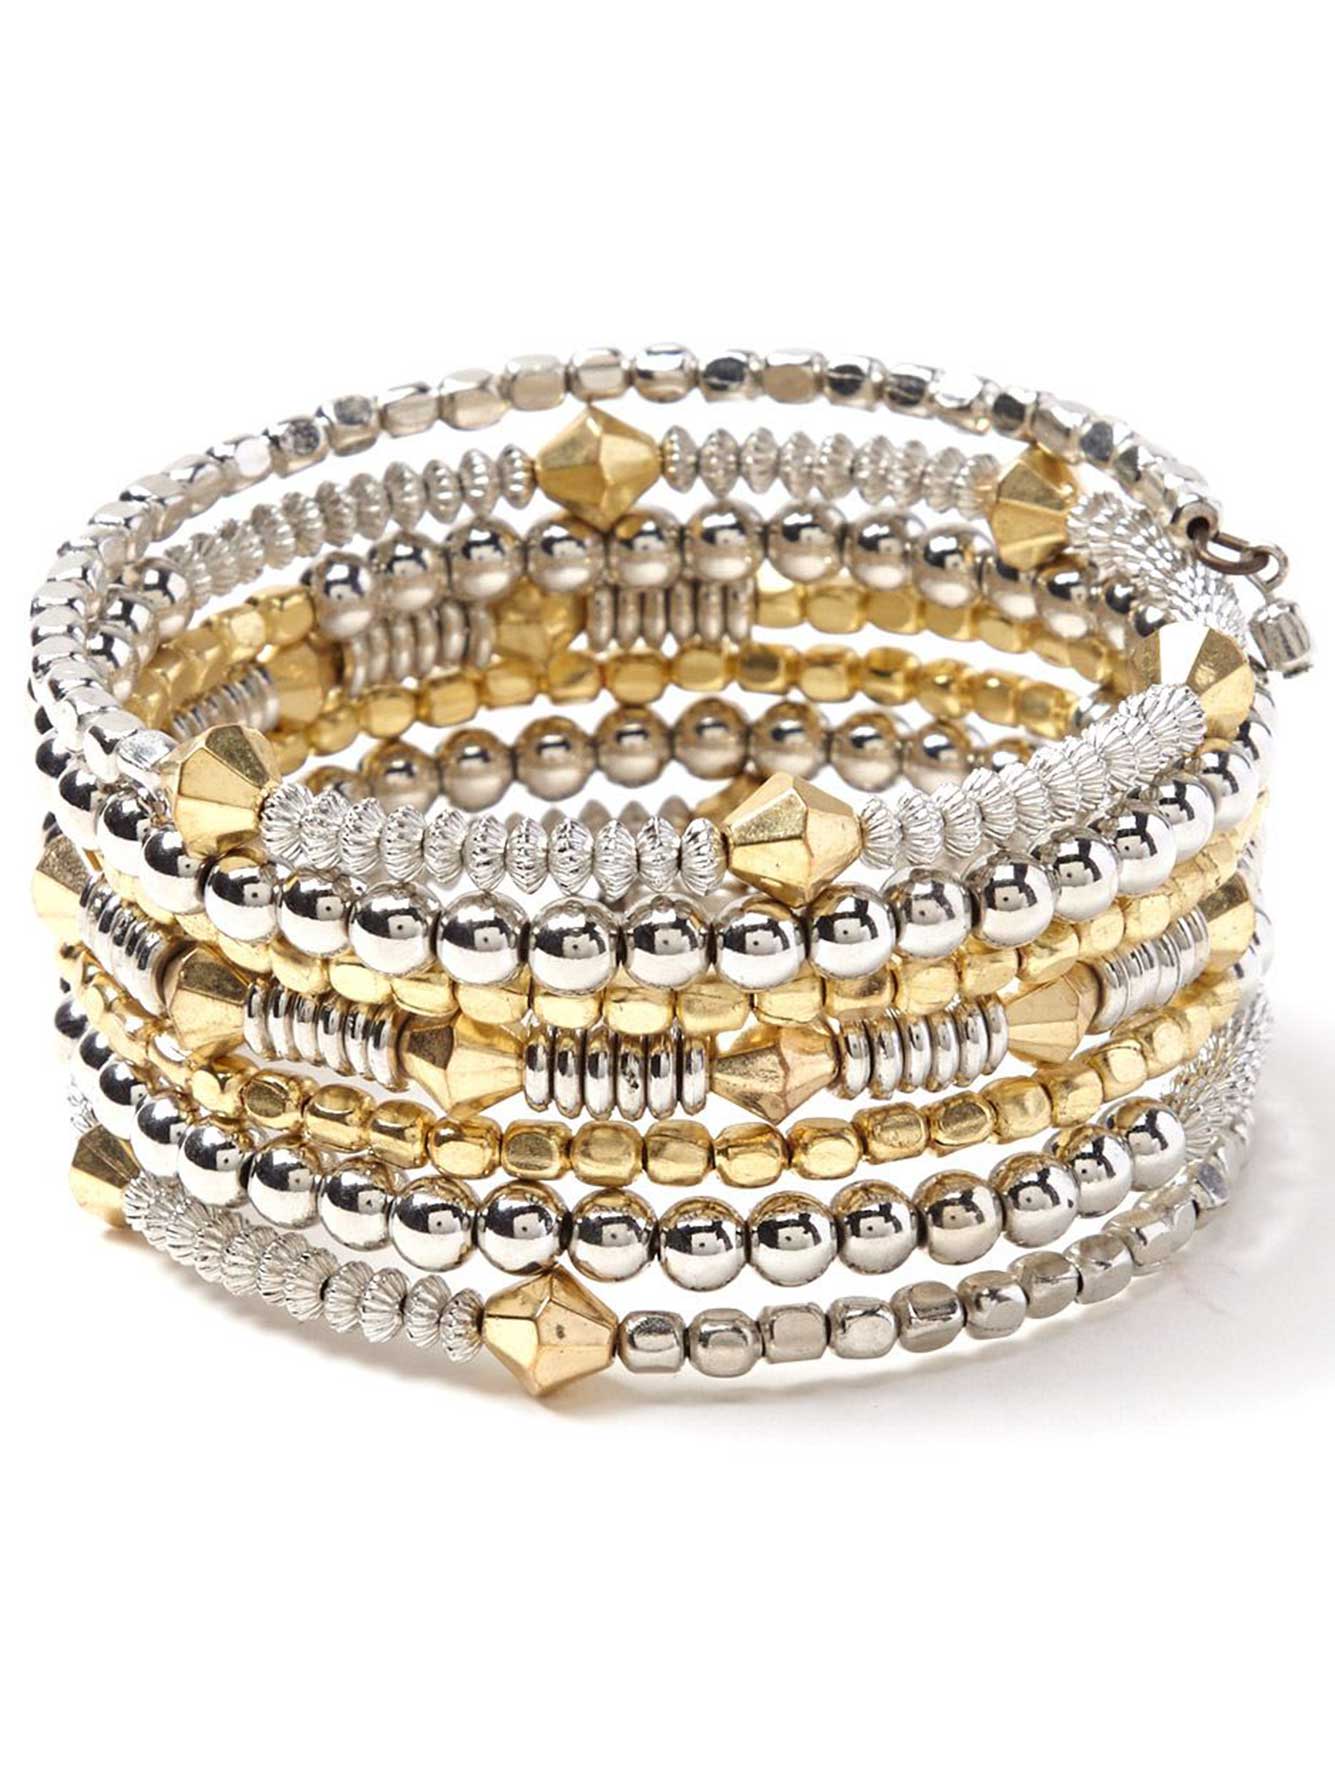 Coil Bracelet with Beads | Penningtons